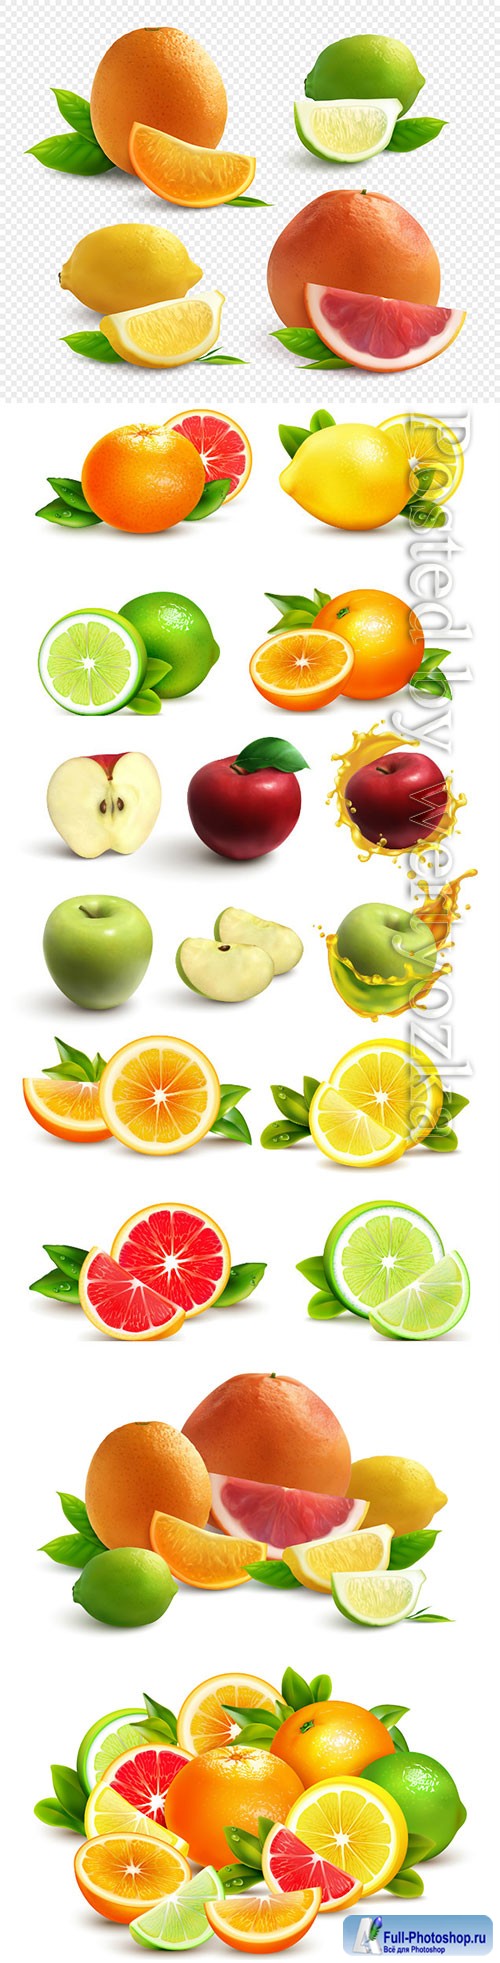 Citrus fruits vector illustration